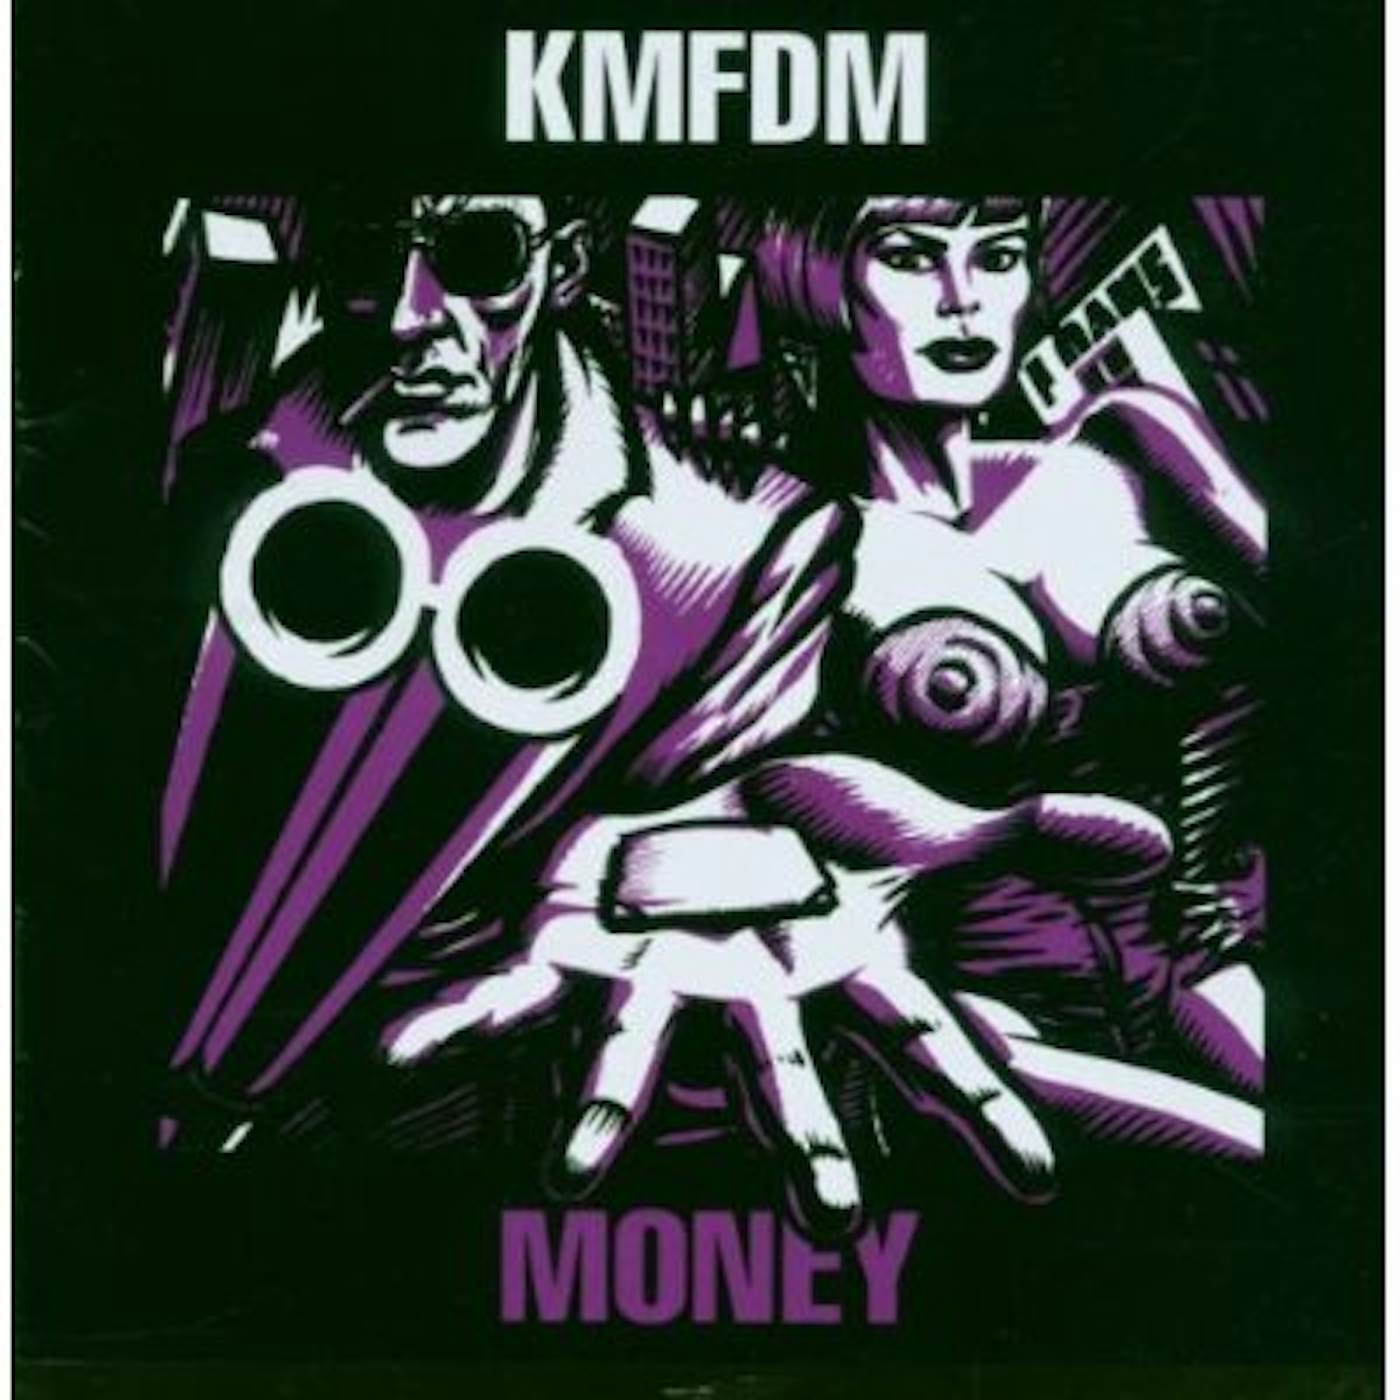 KMFDM MONEY CD